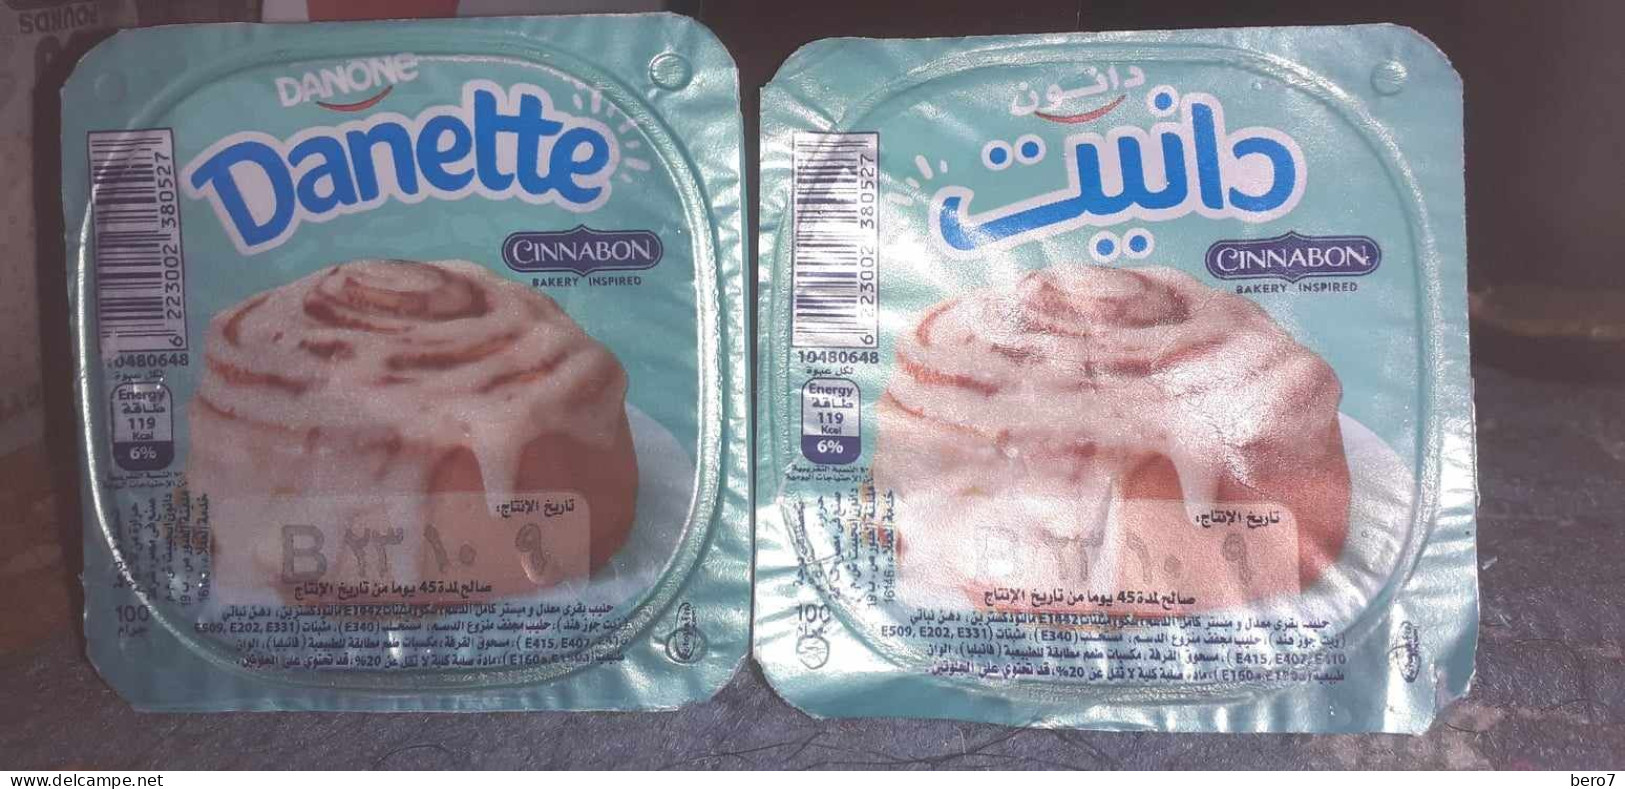 Egypt - Couvercle De Danone Cinnabon Danette [English & Arabic] New Design (foil) (Egypte) (Egitto) (Ägypten) (Egipto) - Milk Tops (Milk Lids)